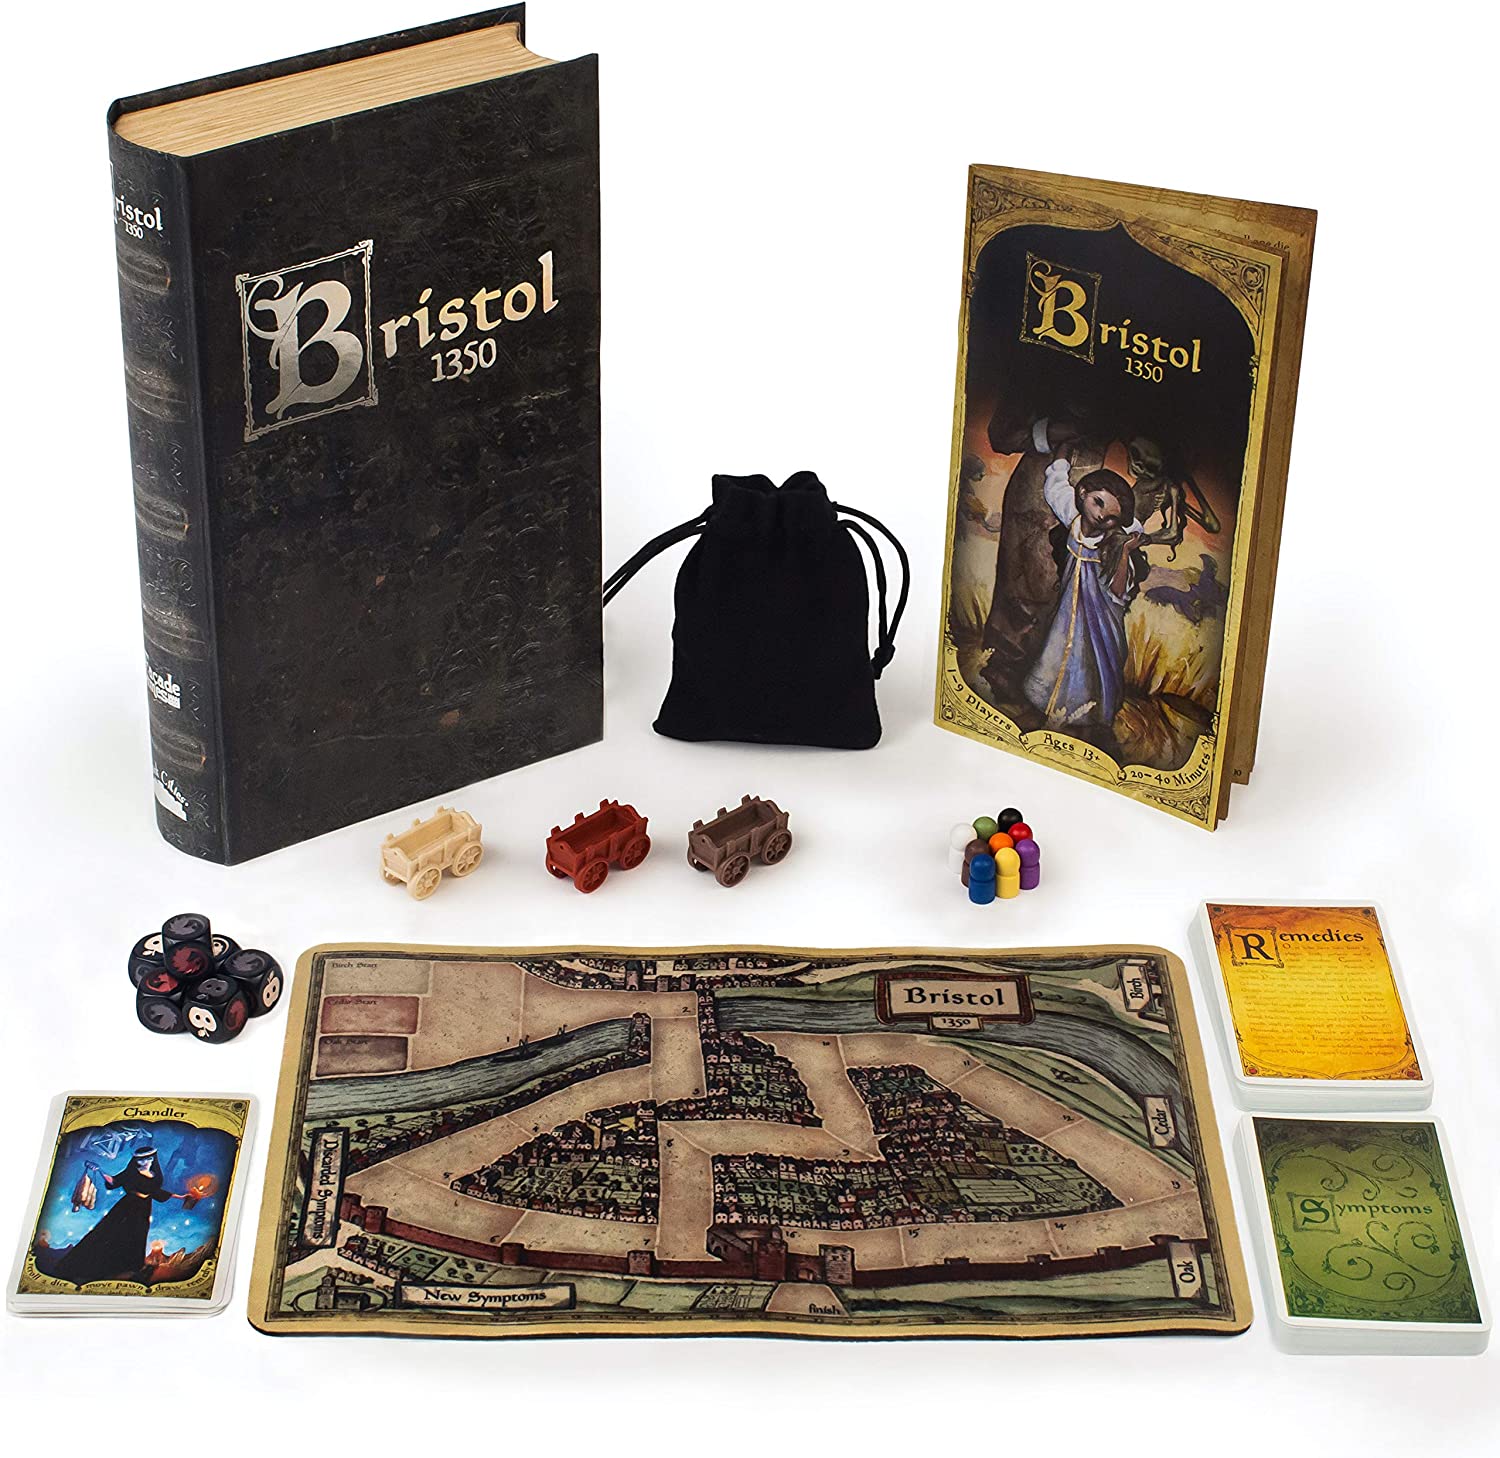 BRISTOL 1350 | Impulse Games and Hobbies